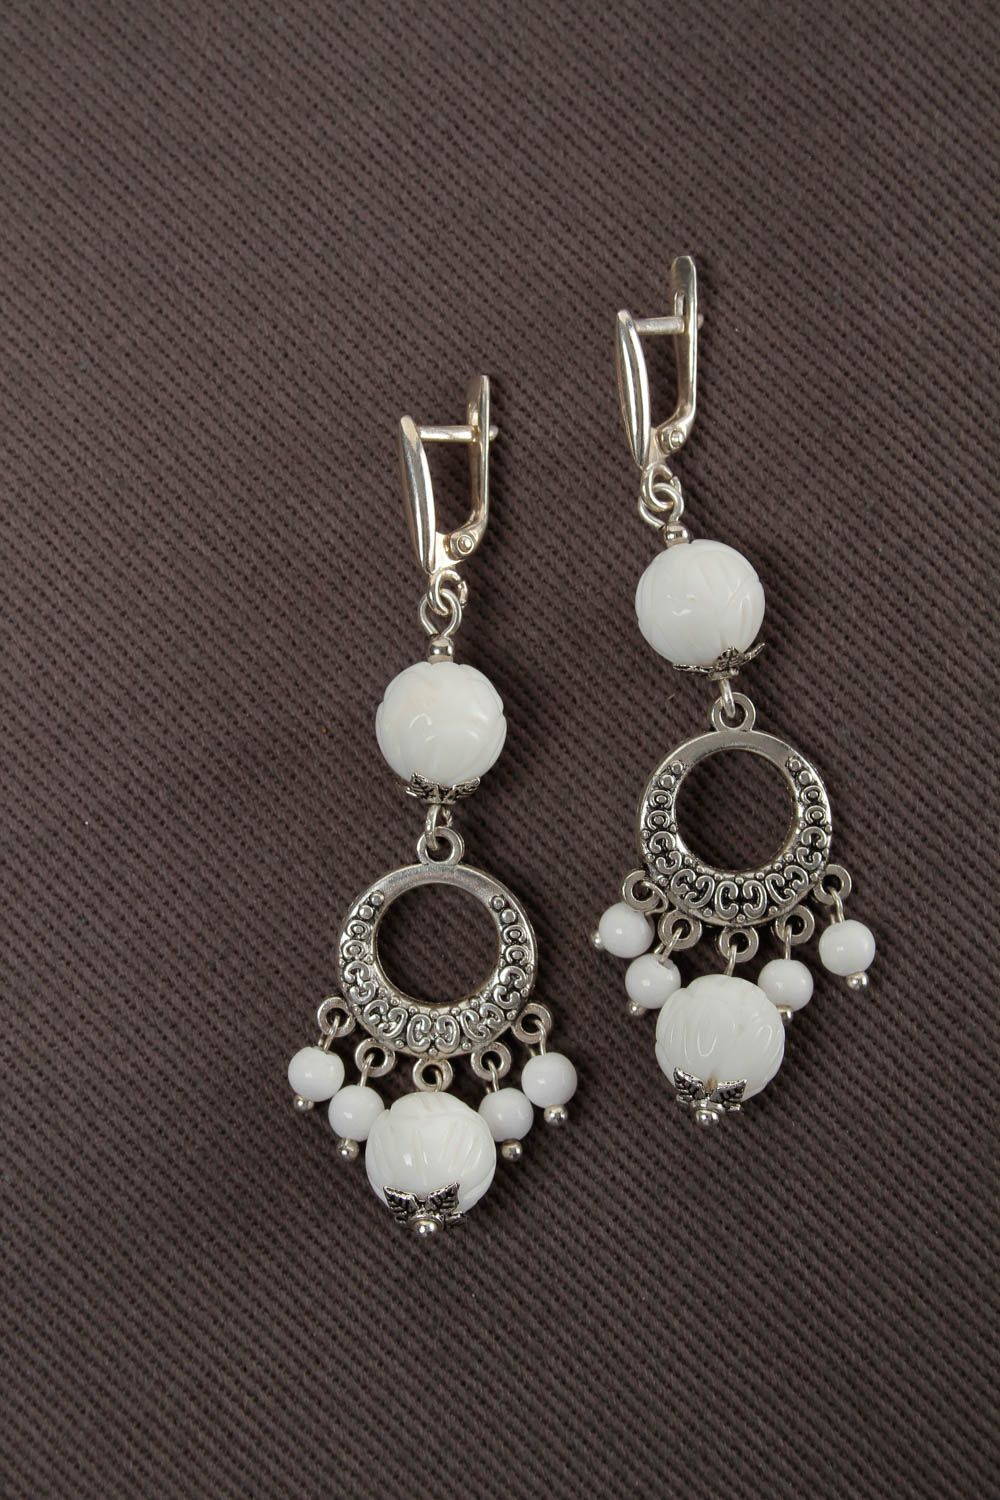 Handmade massive earrings jewelry with natural stone unusual earrings photo 3